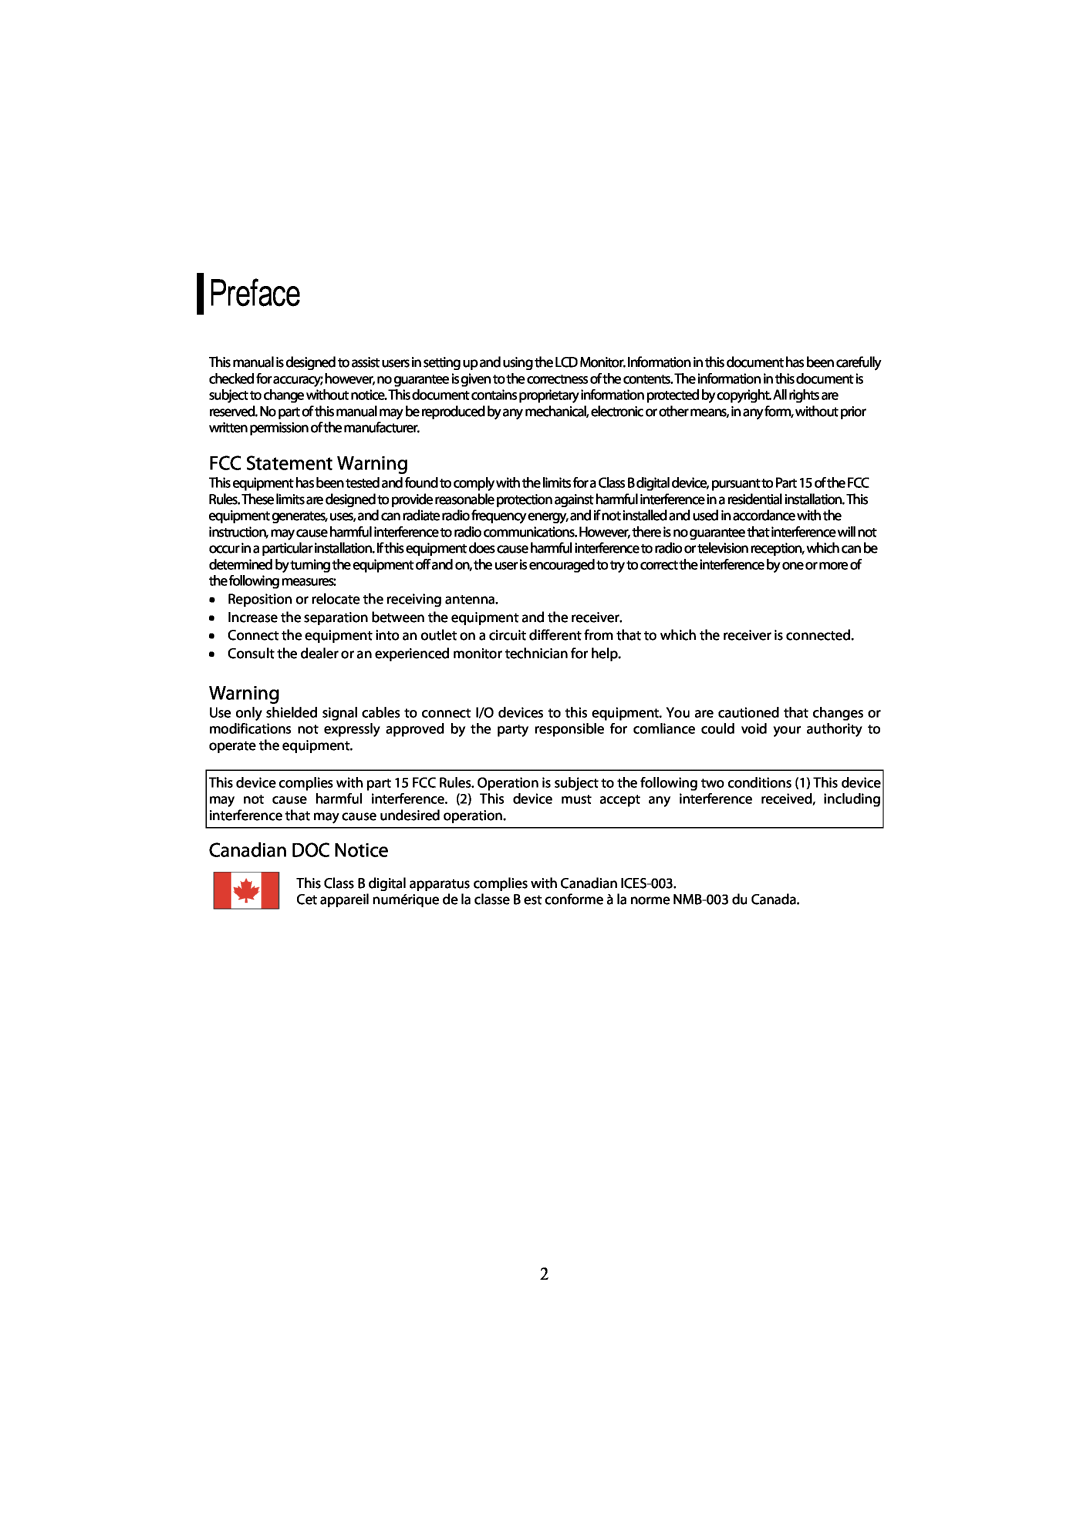 Planar PL1910MW manual Preface, FCC Statement Warning, Canadian DOC Notice 